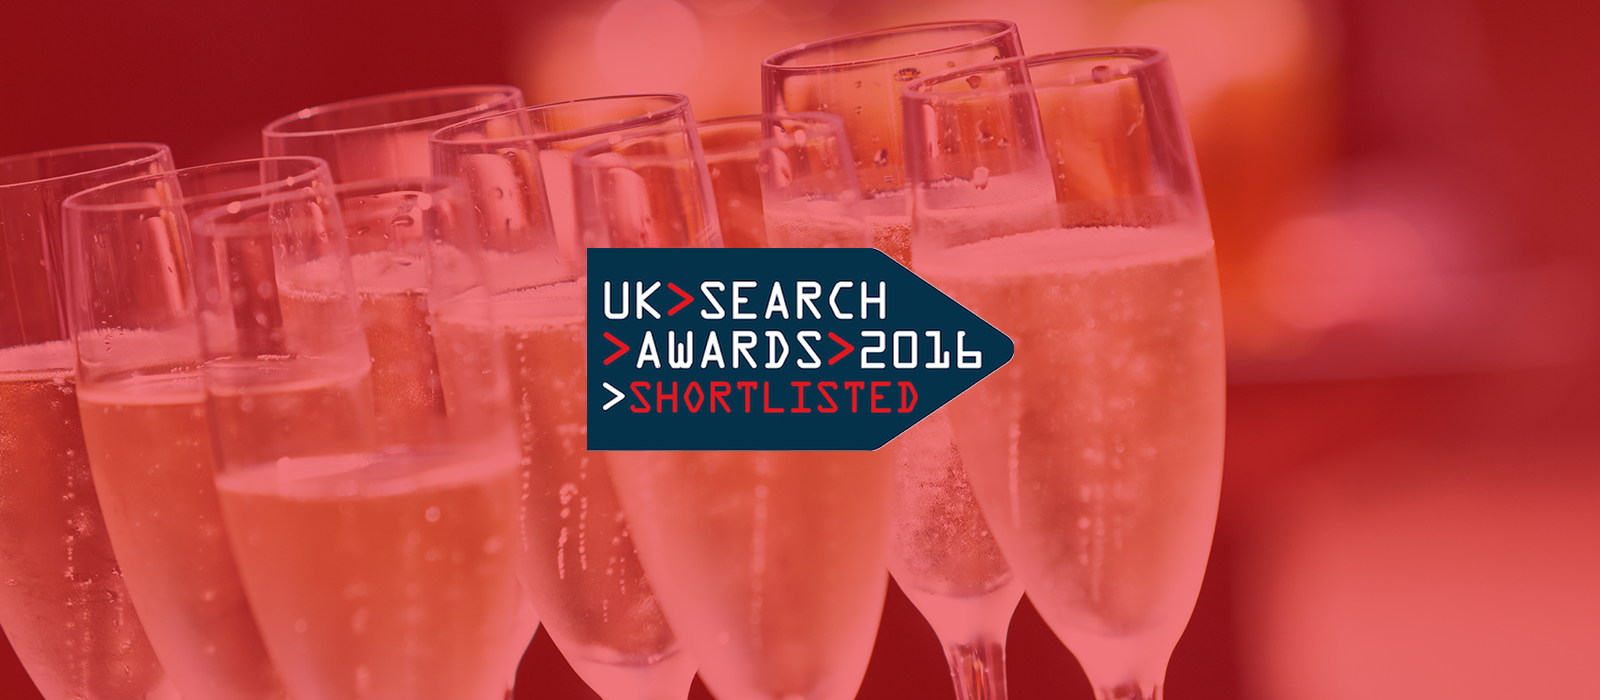 we've-been-nominated-UK-Search-Awards-2016-award-logo-image